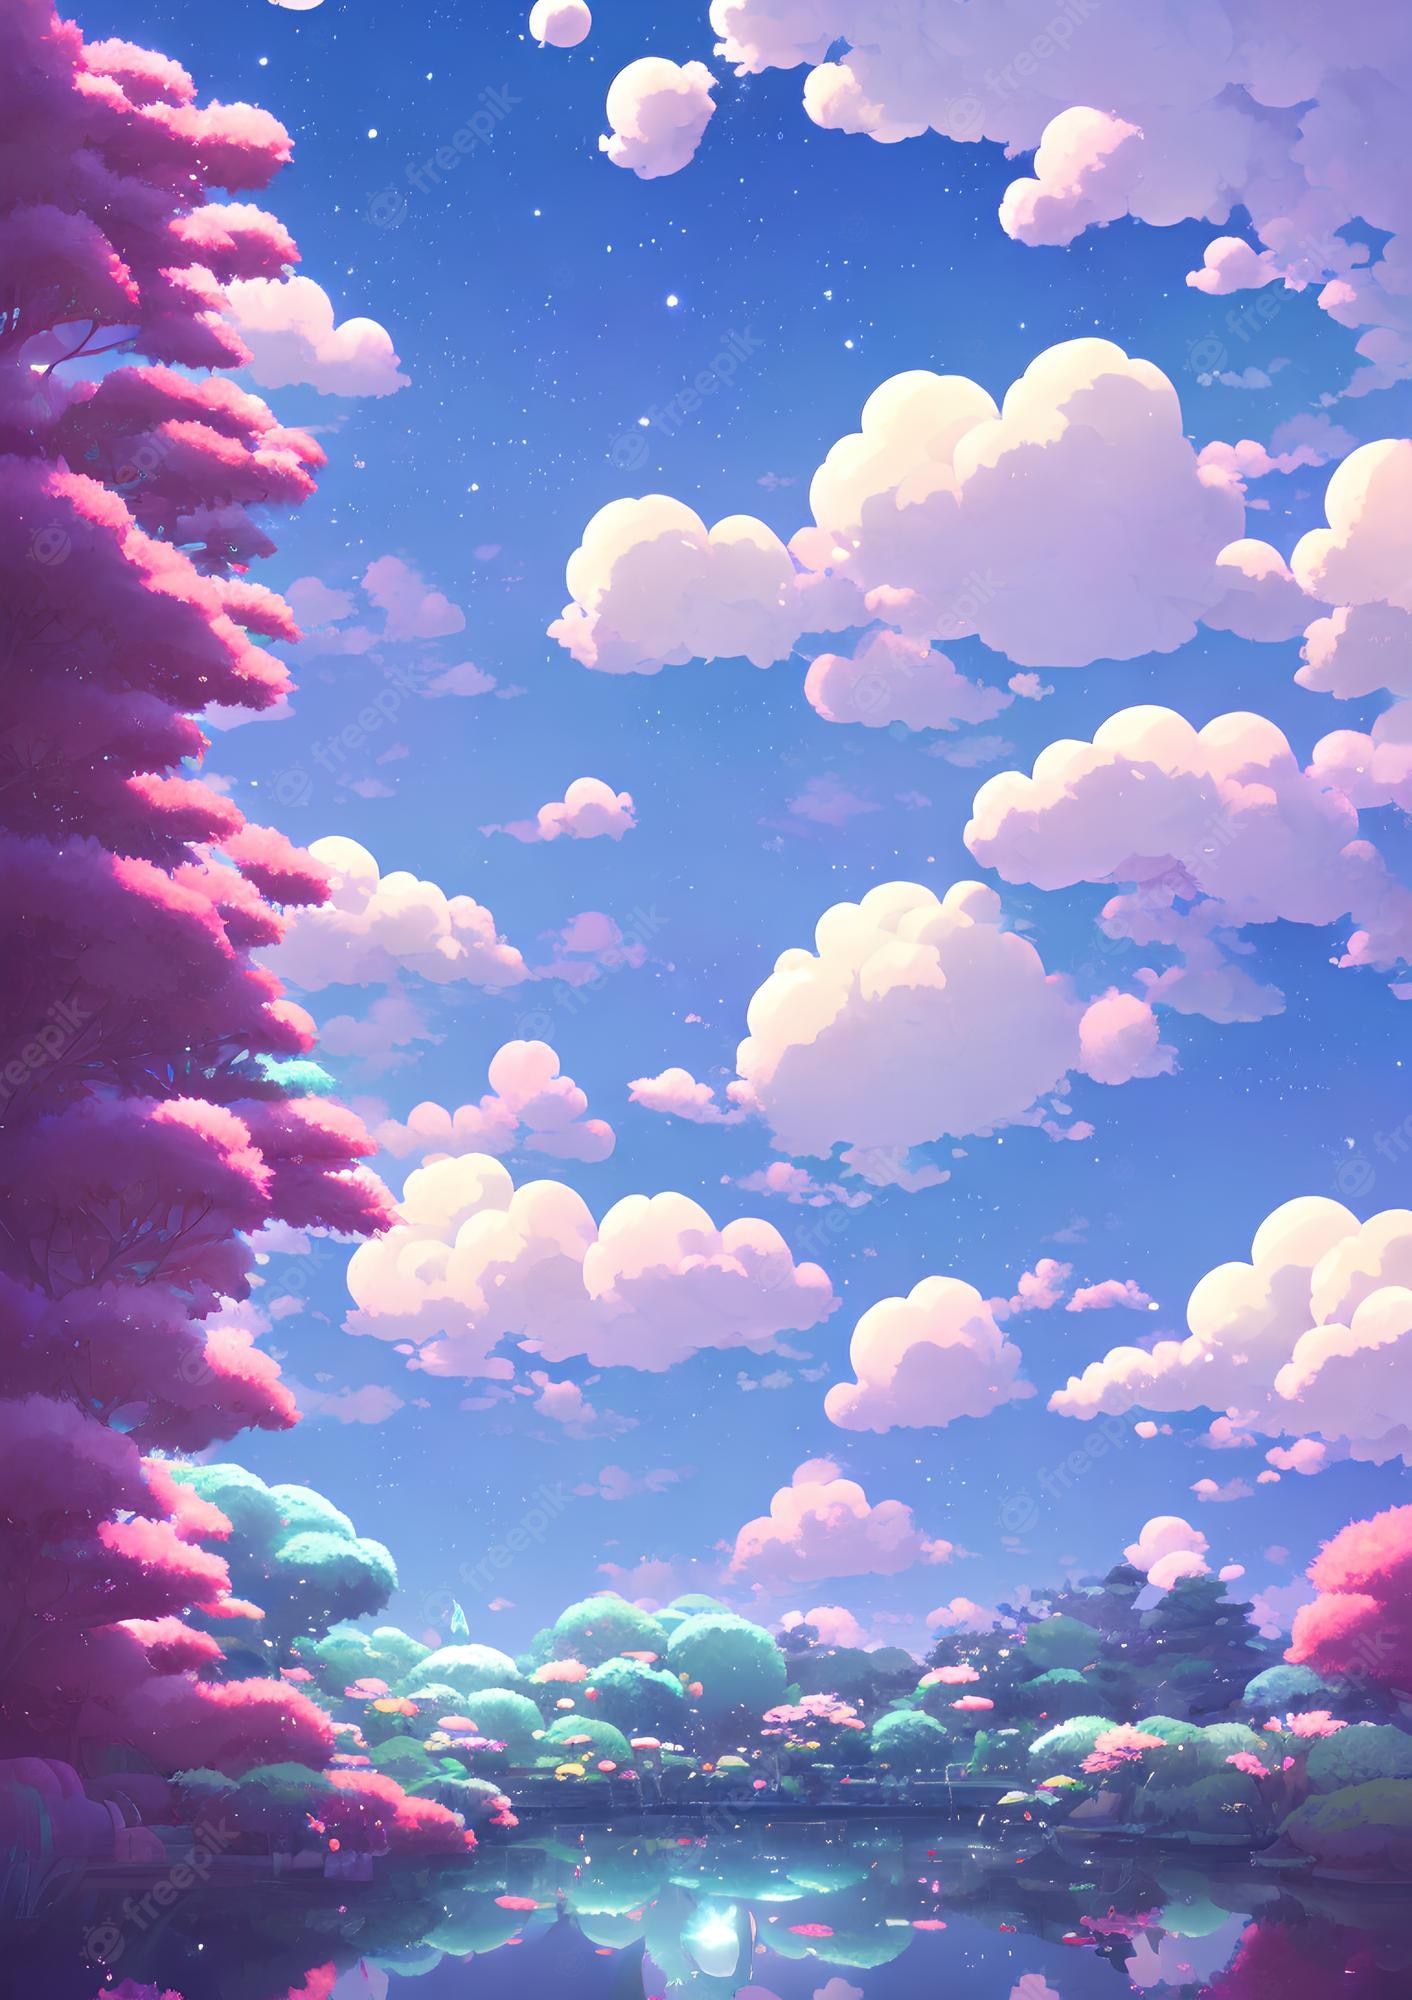 Anime Landscape Image